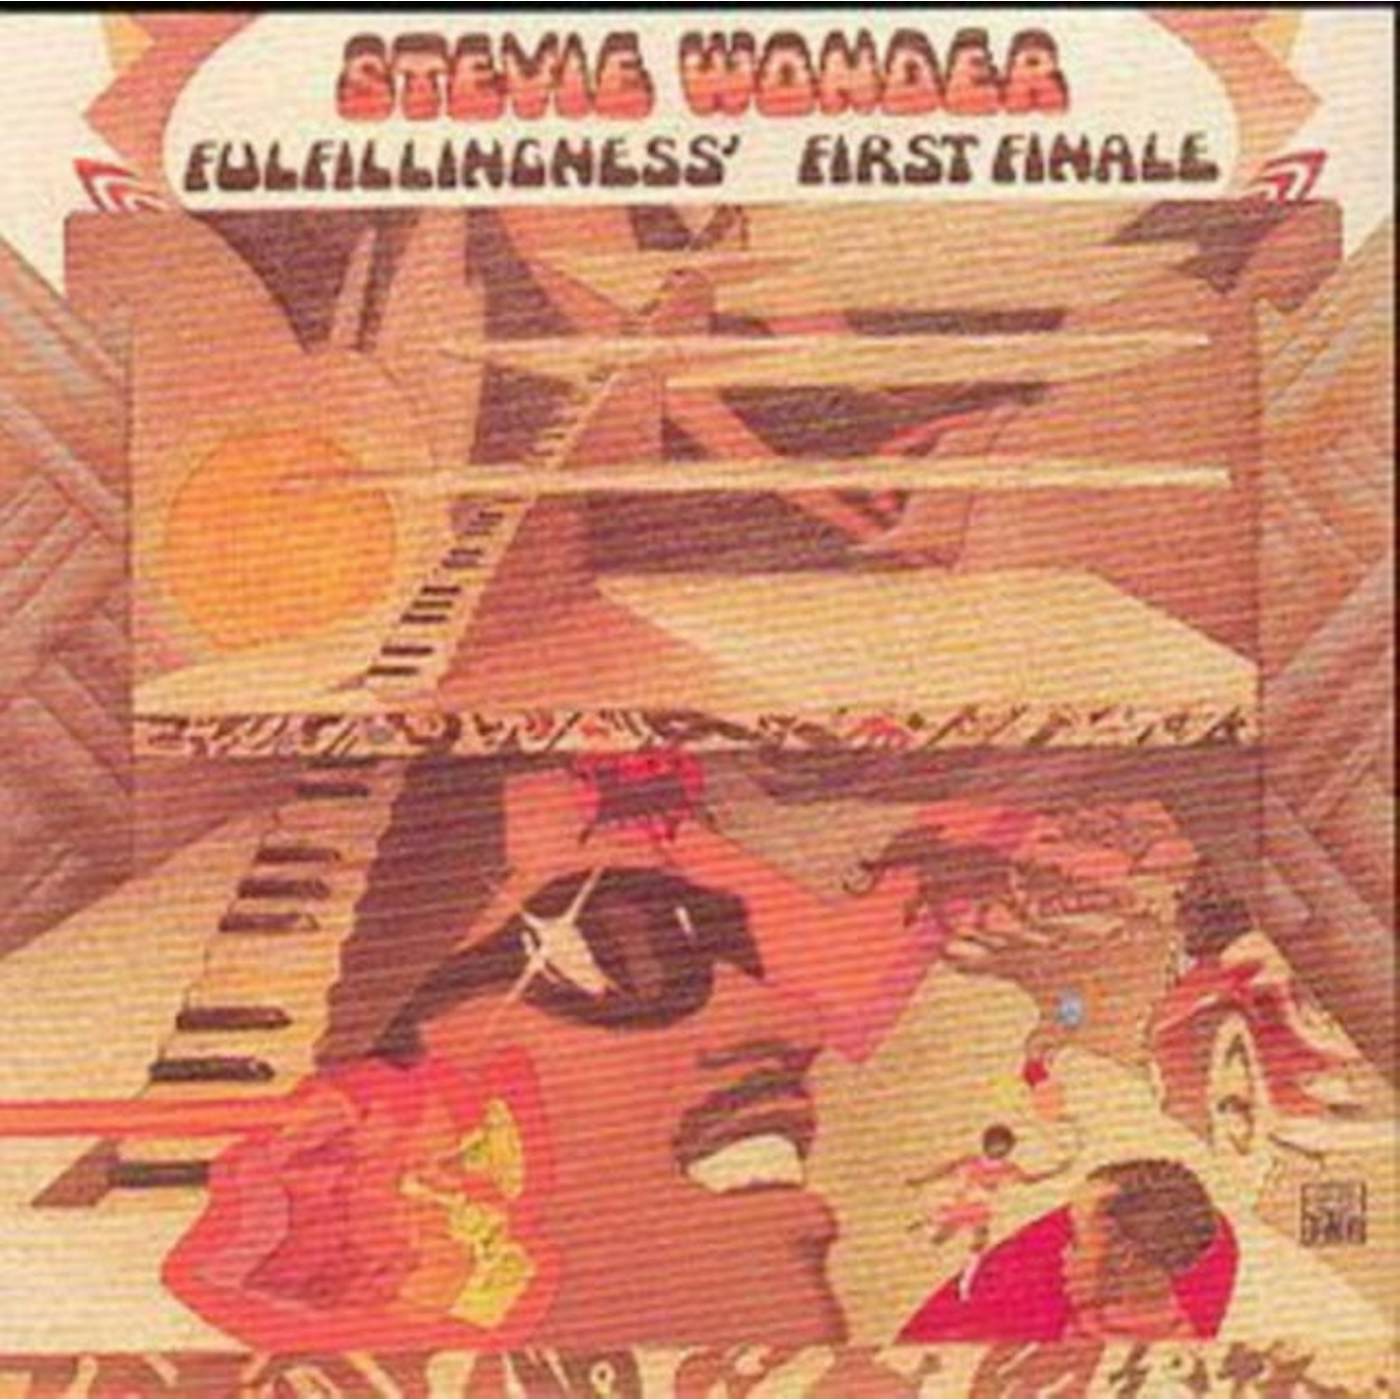 Stevie Wonder CD - Fulfillingness' First Finale